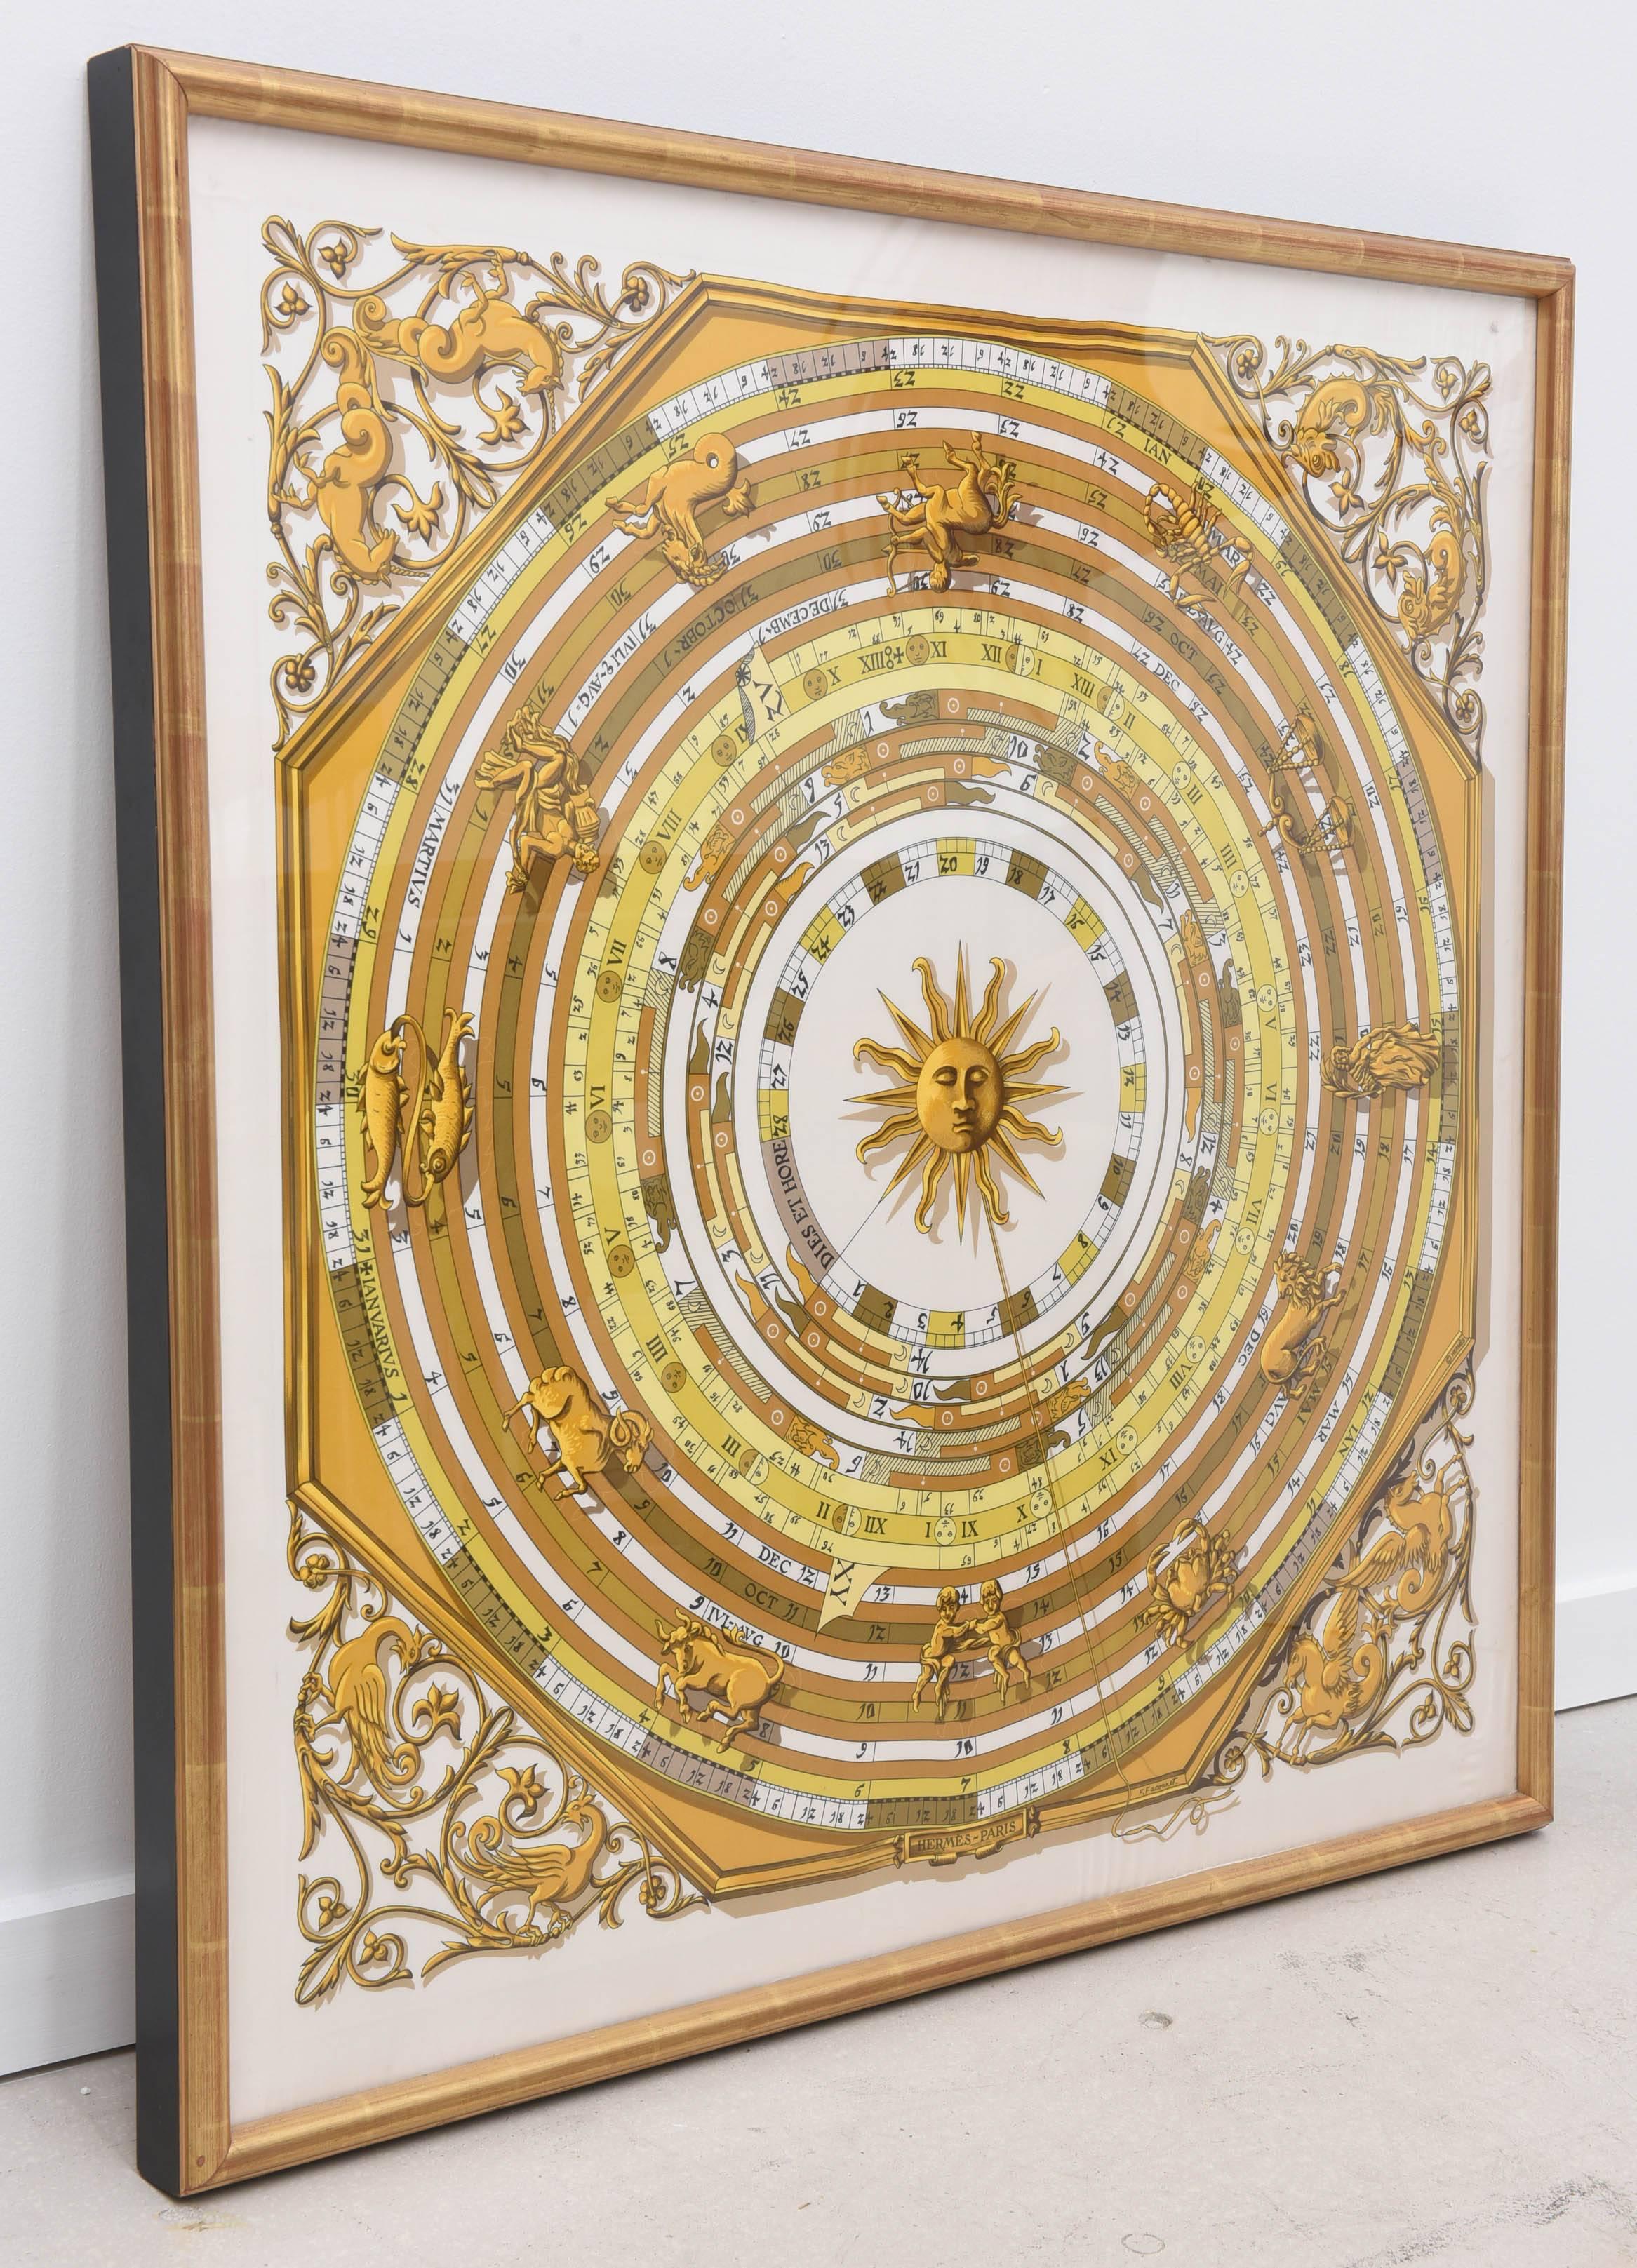 Hermes zodiac sign scarf with center sun motif framed in giltwood frame.